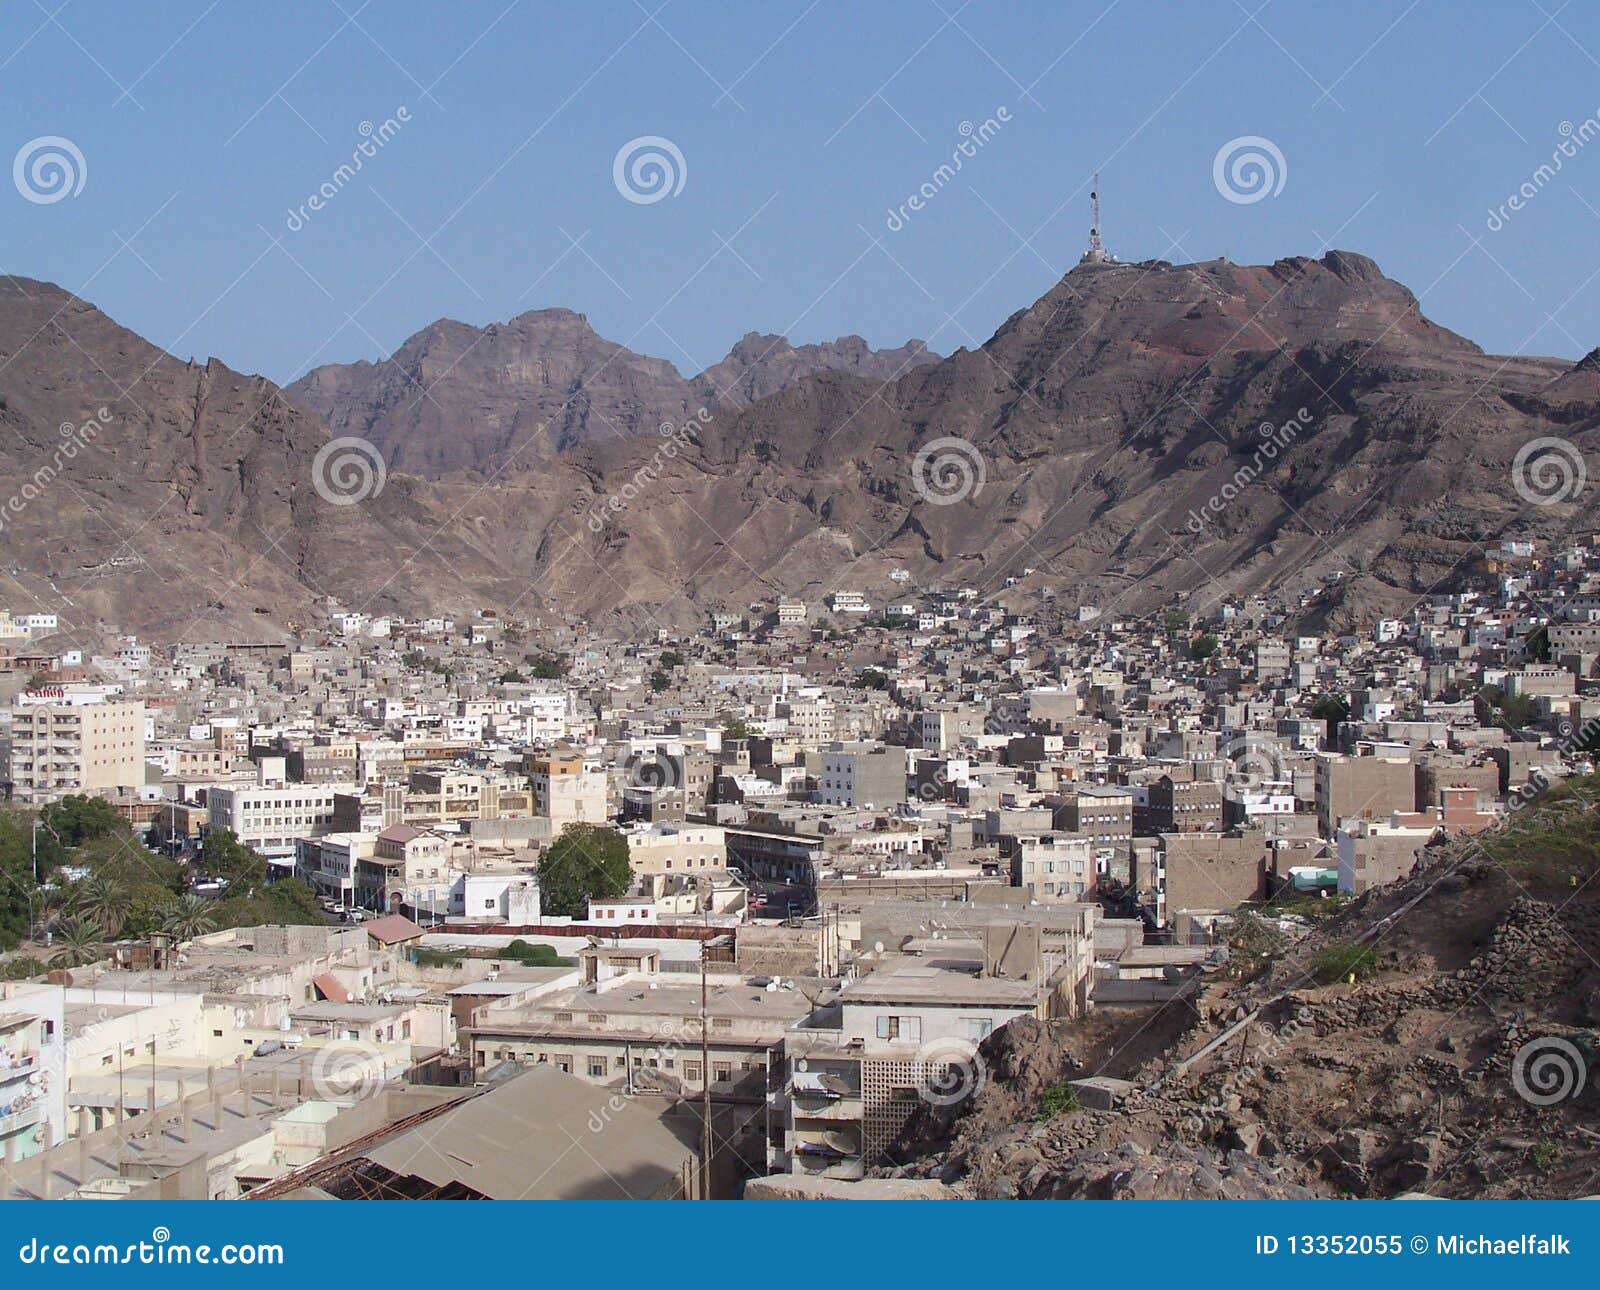 aden - south yemen